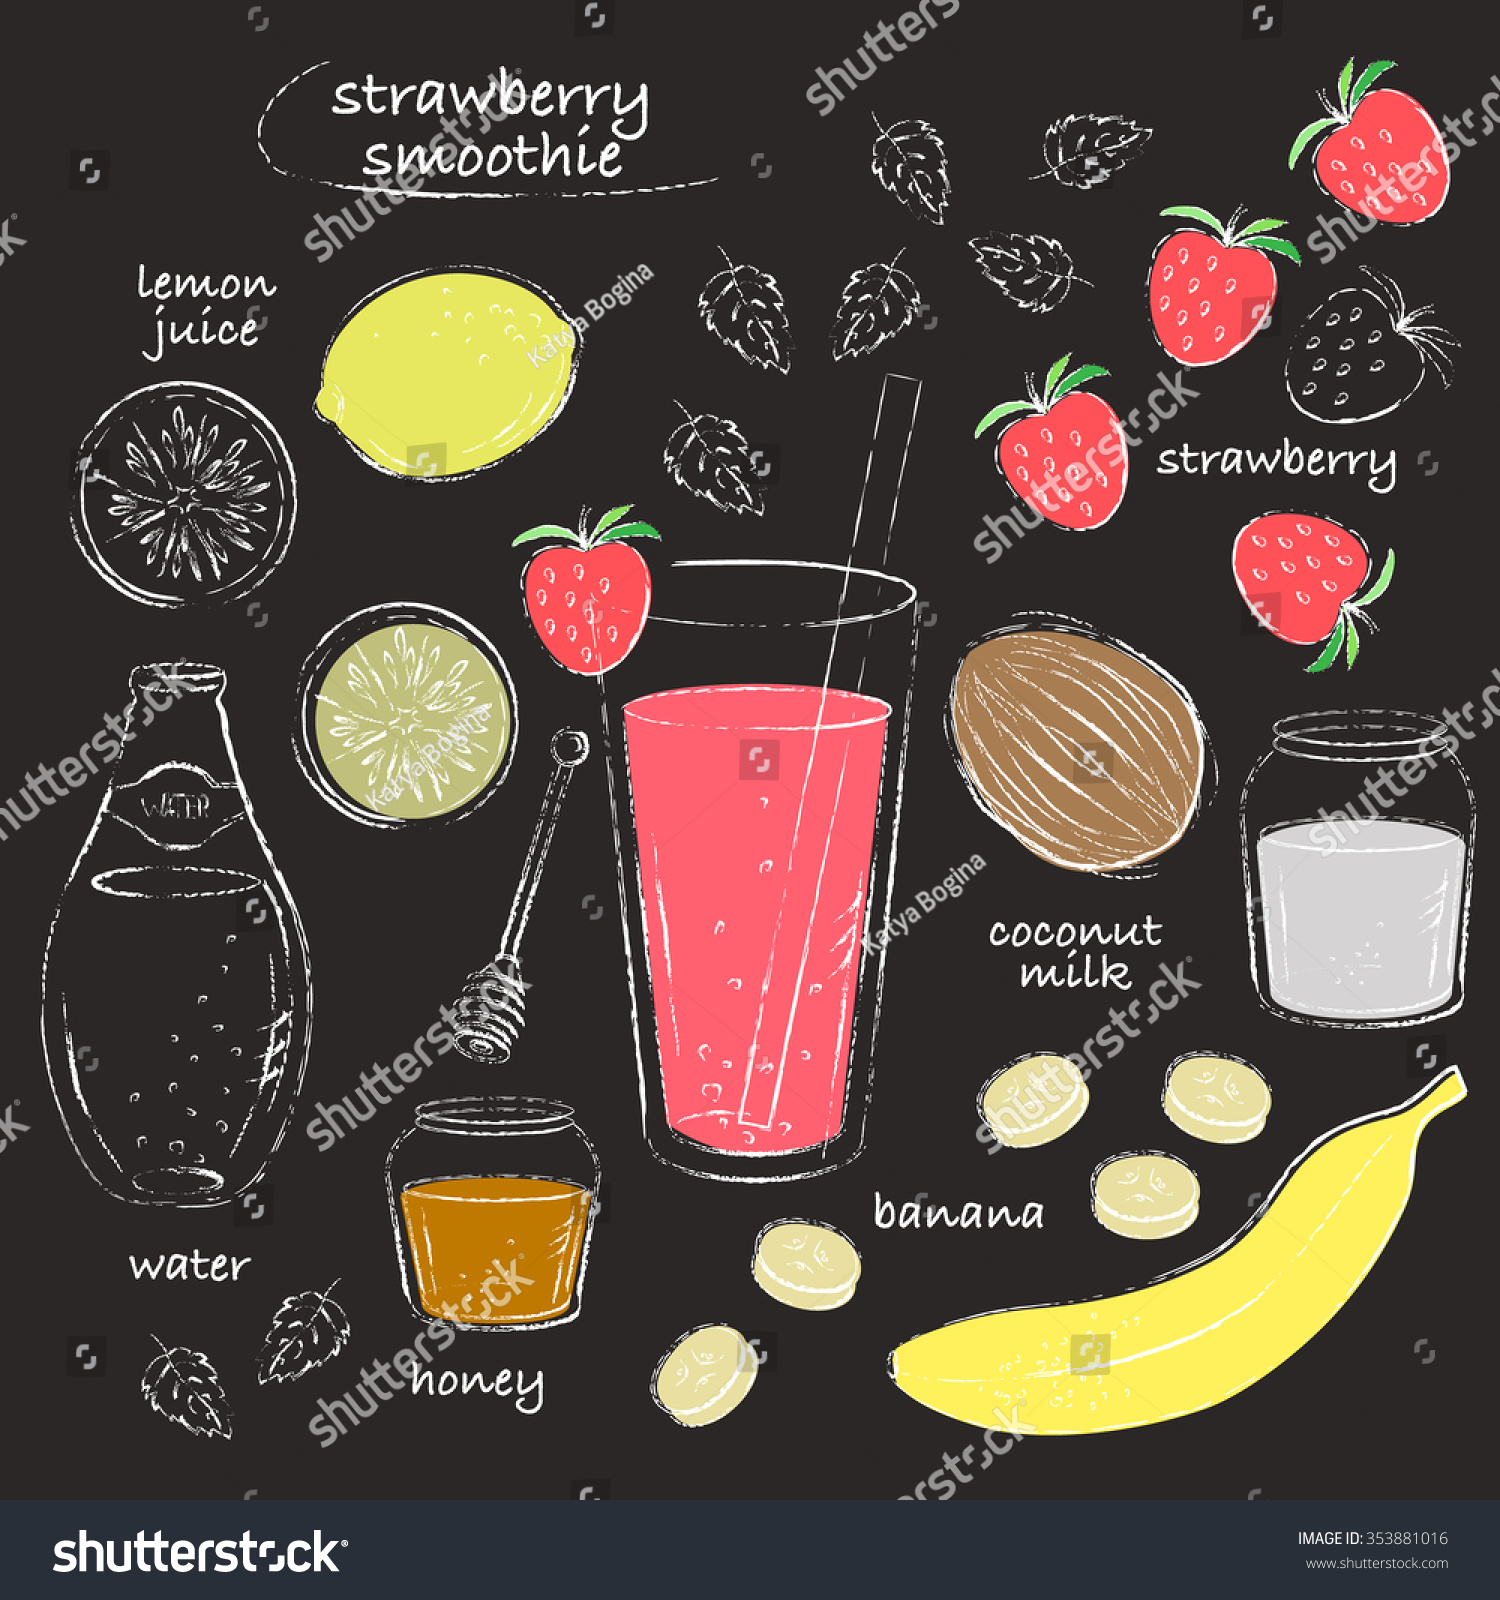 strawberry smoothie clip art - photo #44